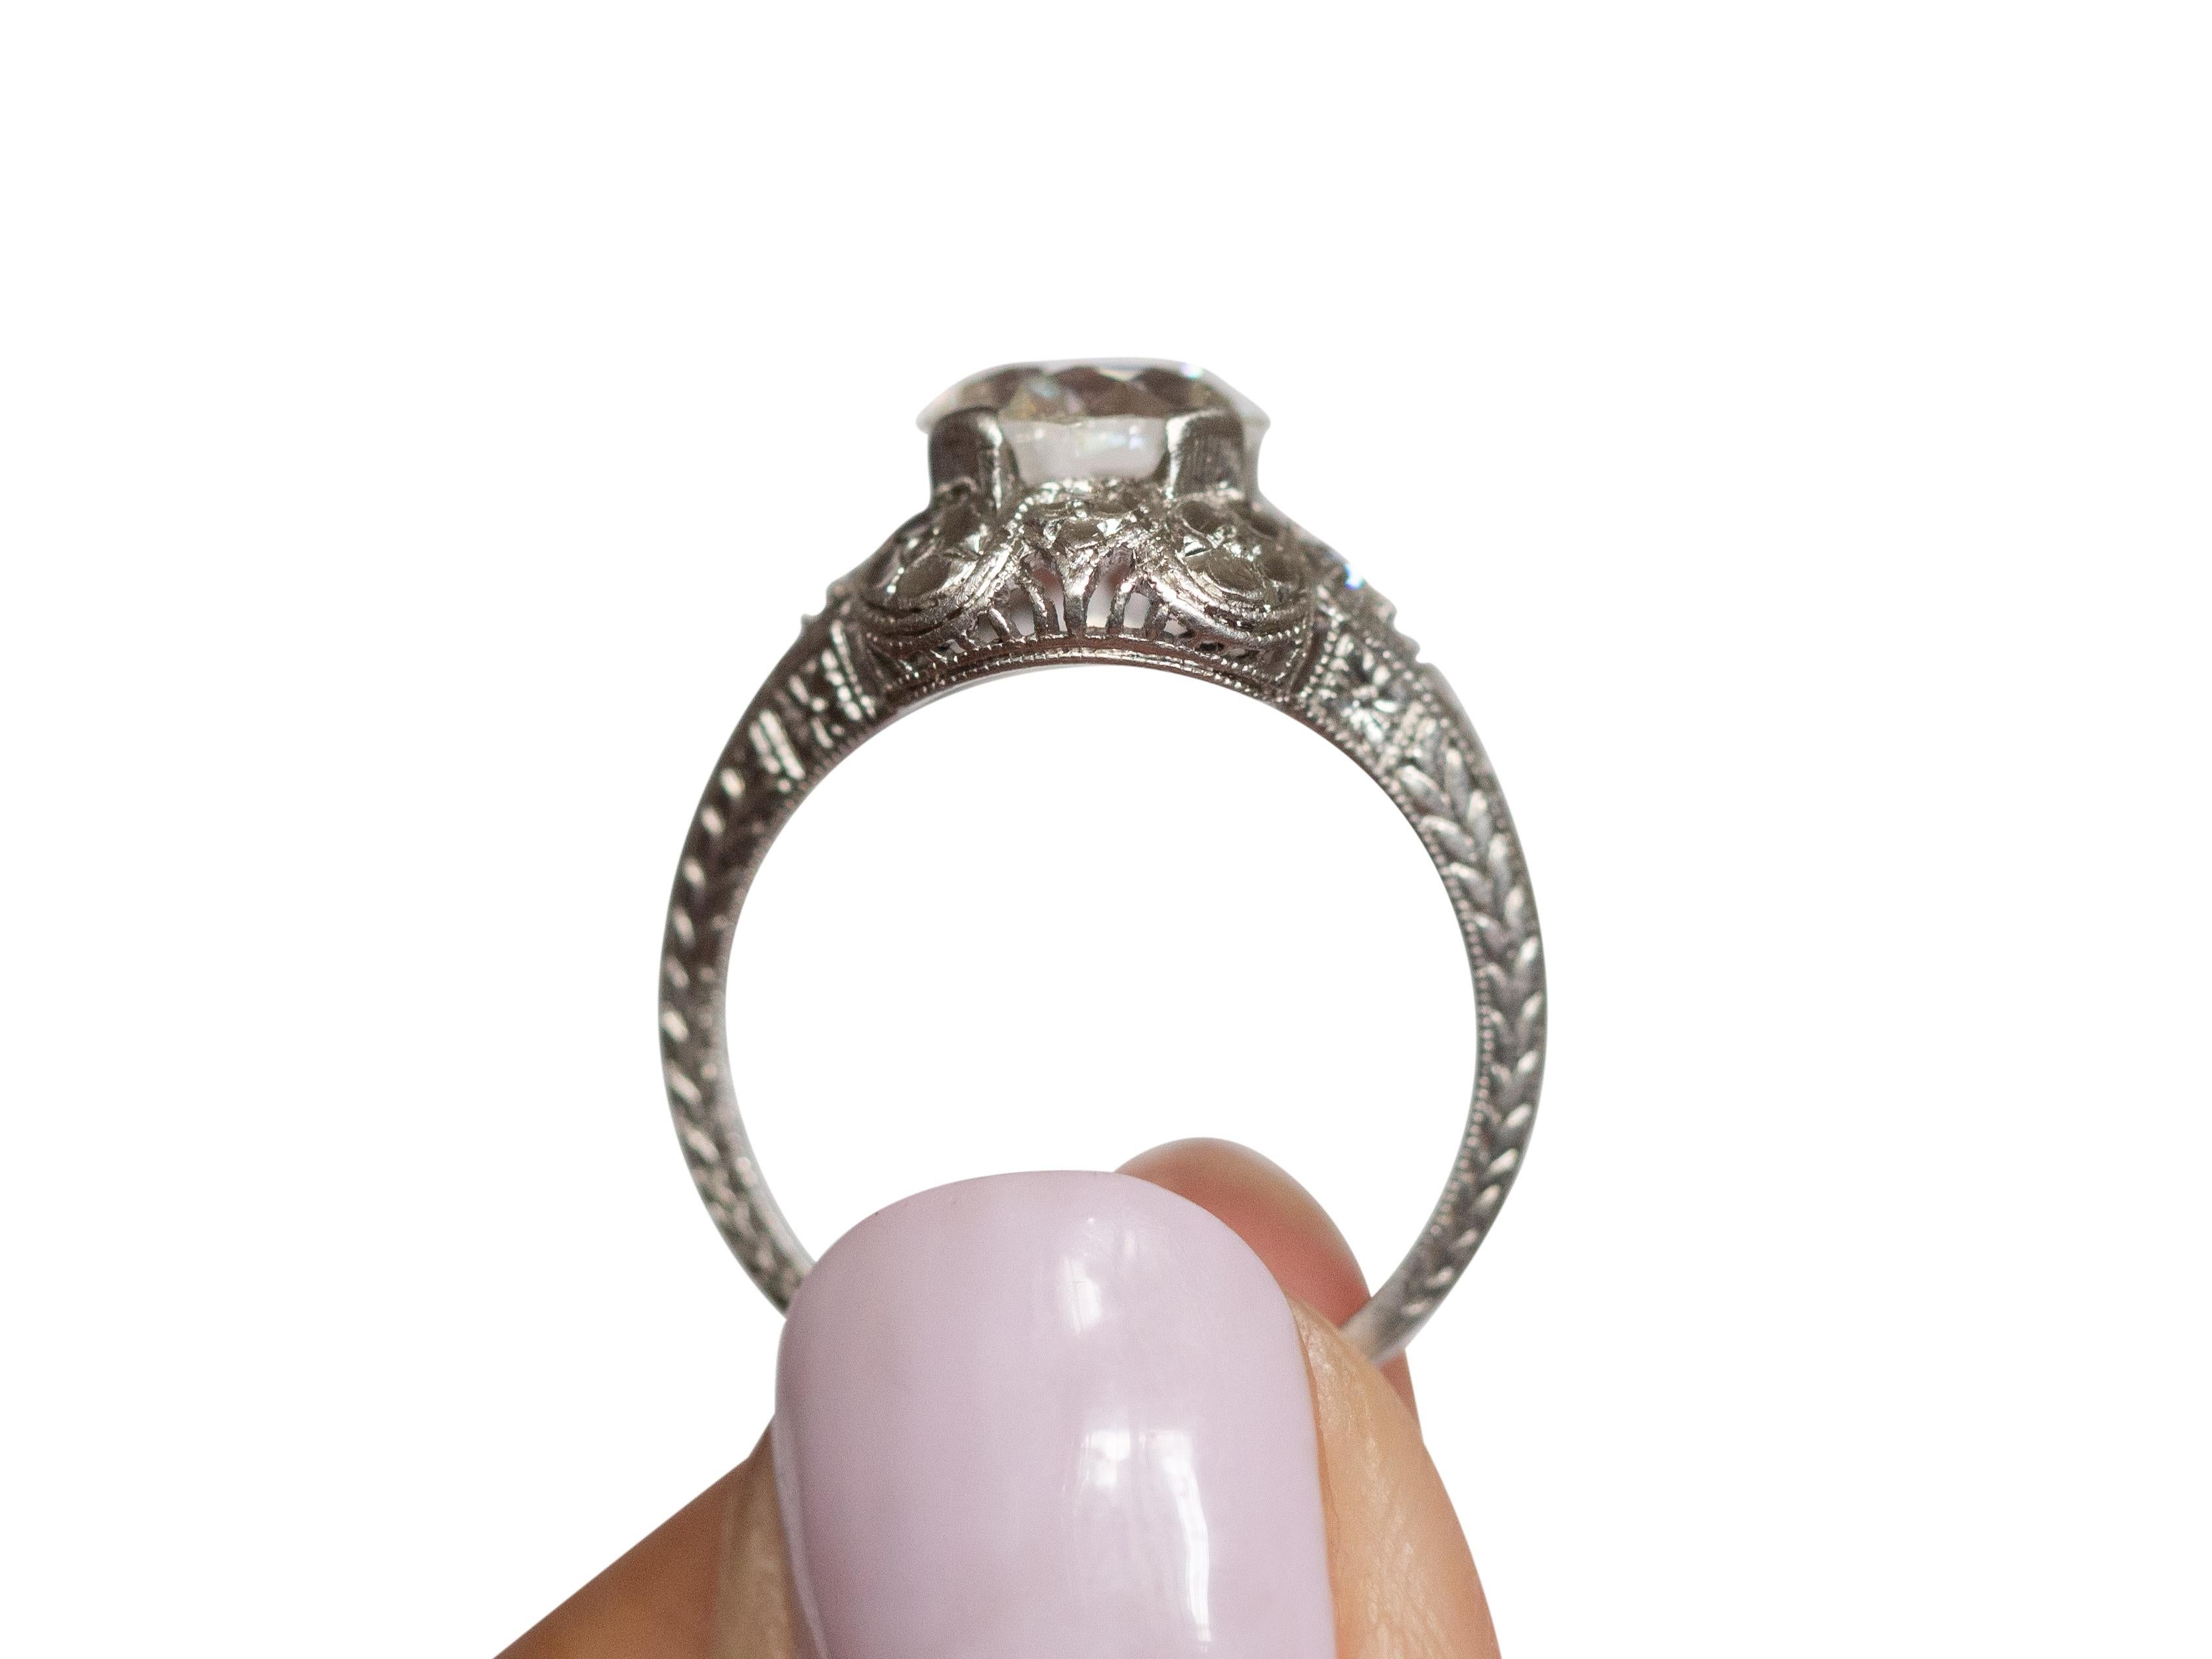 1.37 carat diamond ring